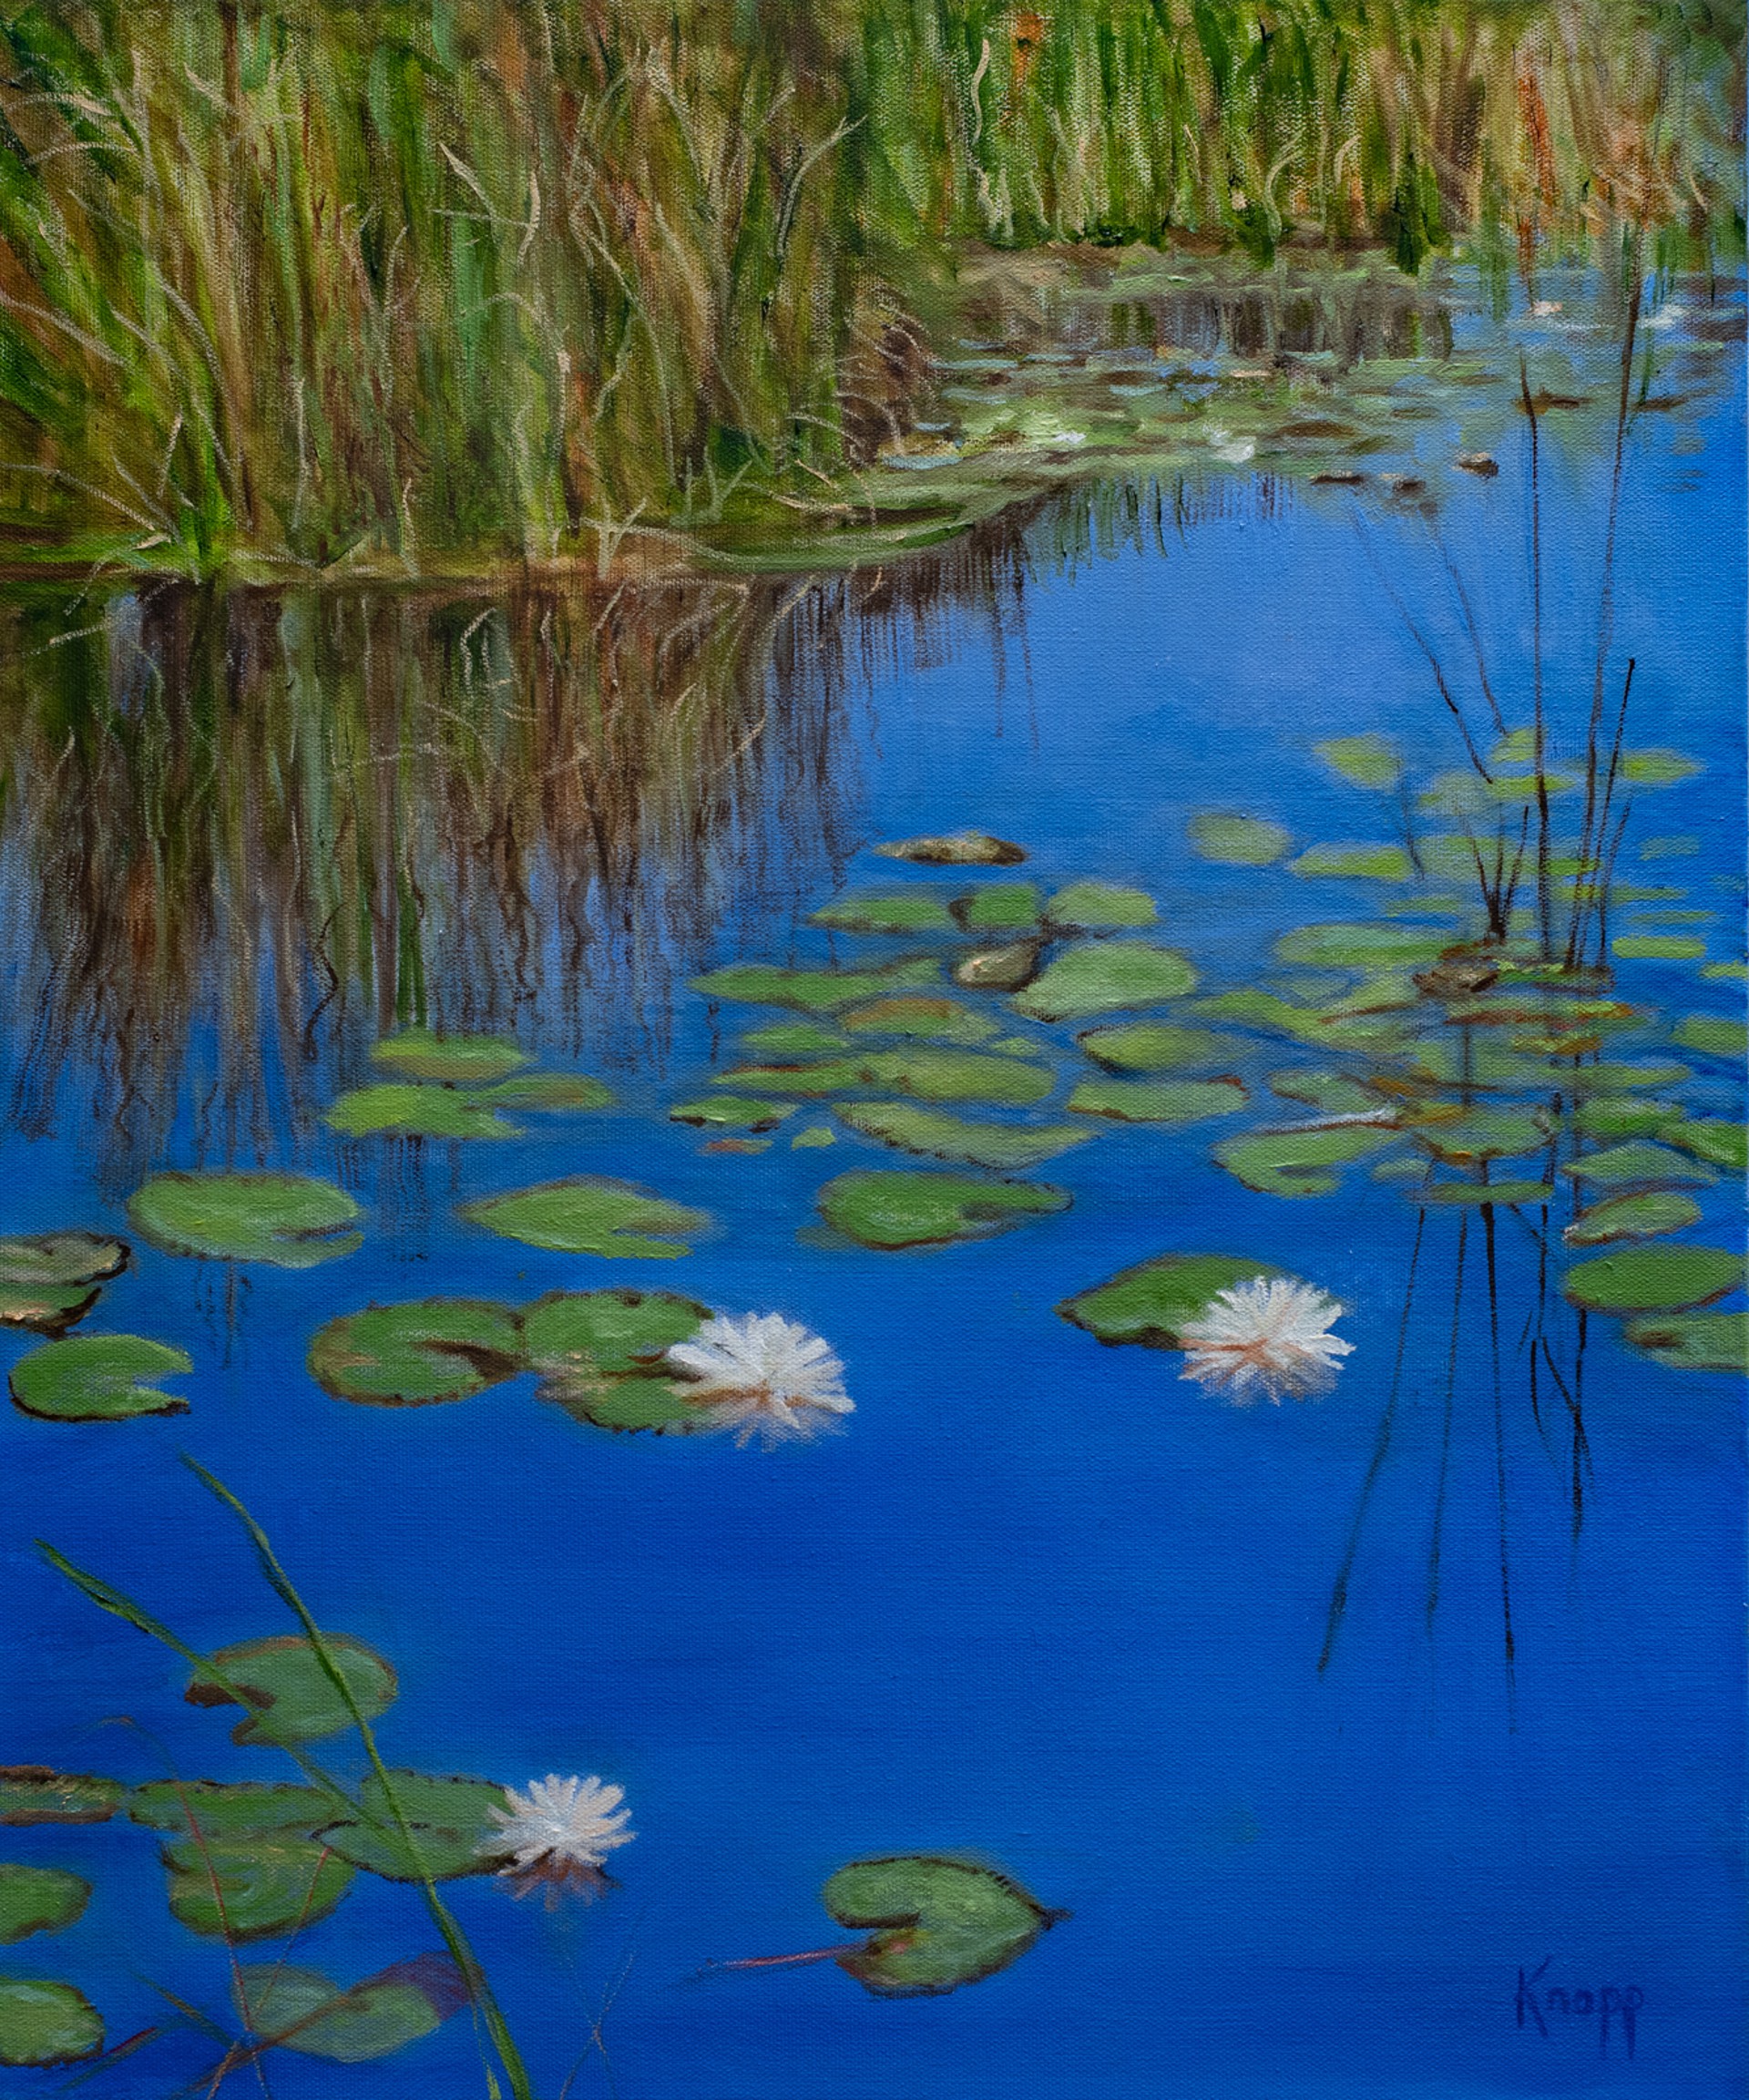 Lillies I by Kathy Knopp